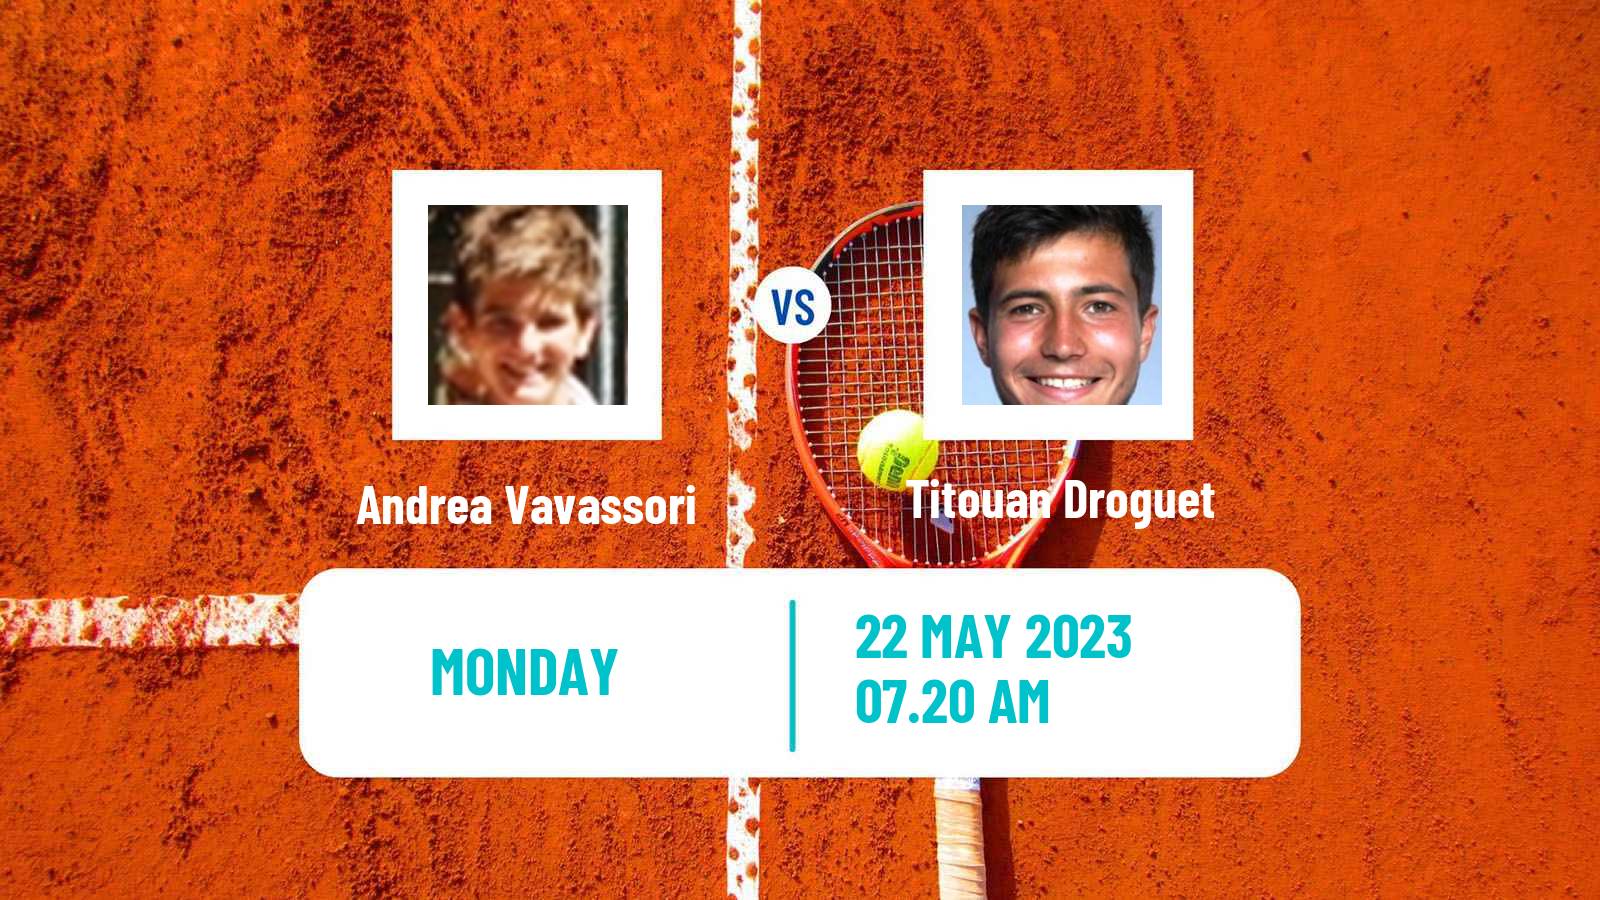 Tennis ATP Roland Garros Andrea Vavassori - Titouan Droguet